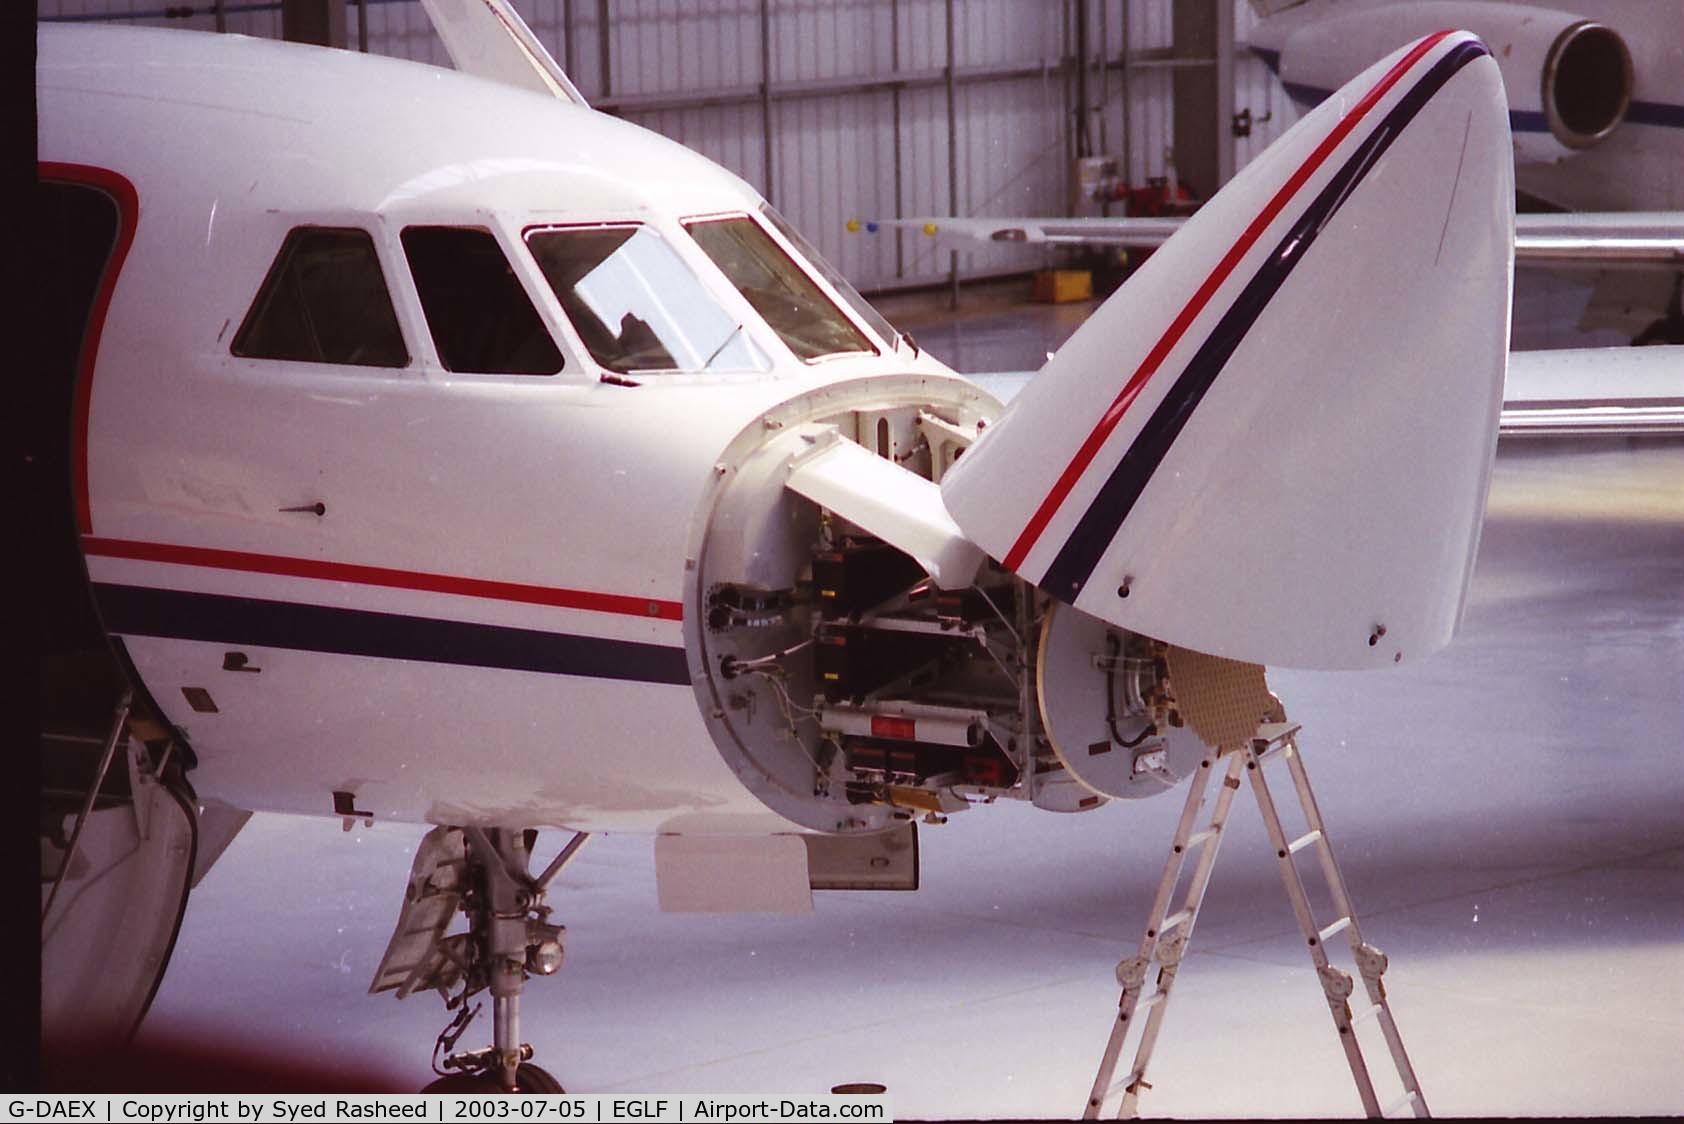 G-DAEX, 2001 Dassault Falcon 900EX C/N 78, Falcon 900EX in Hanger no. 2 - Farnborough